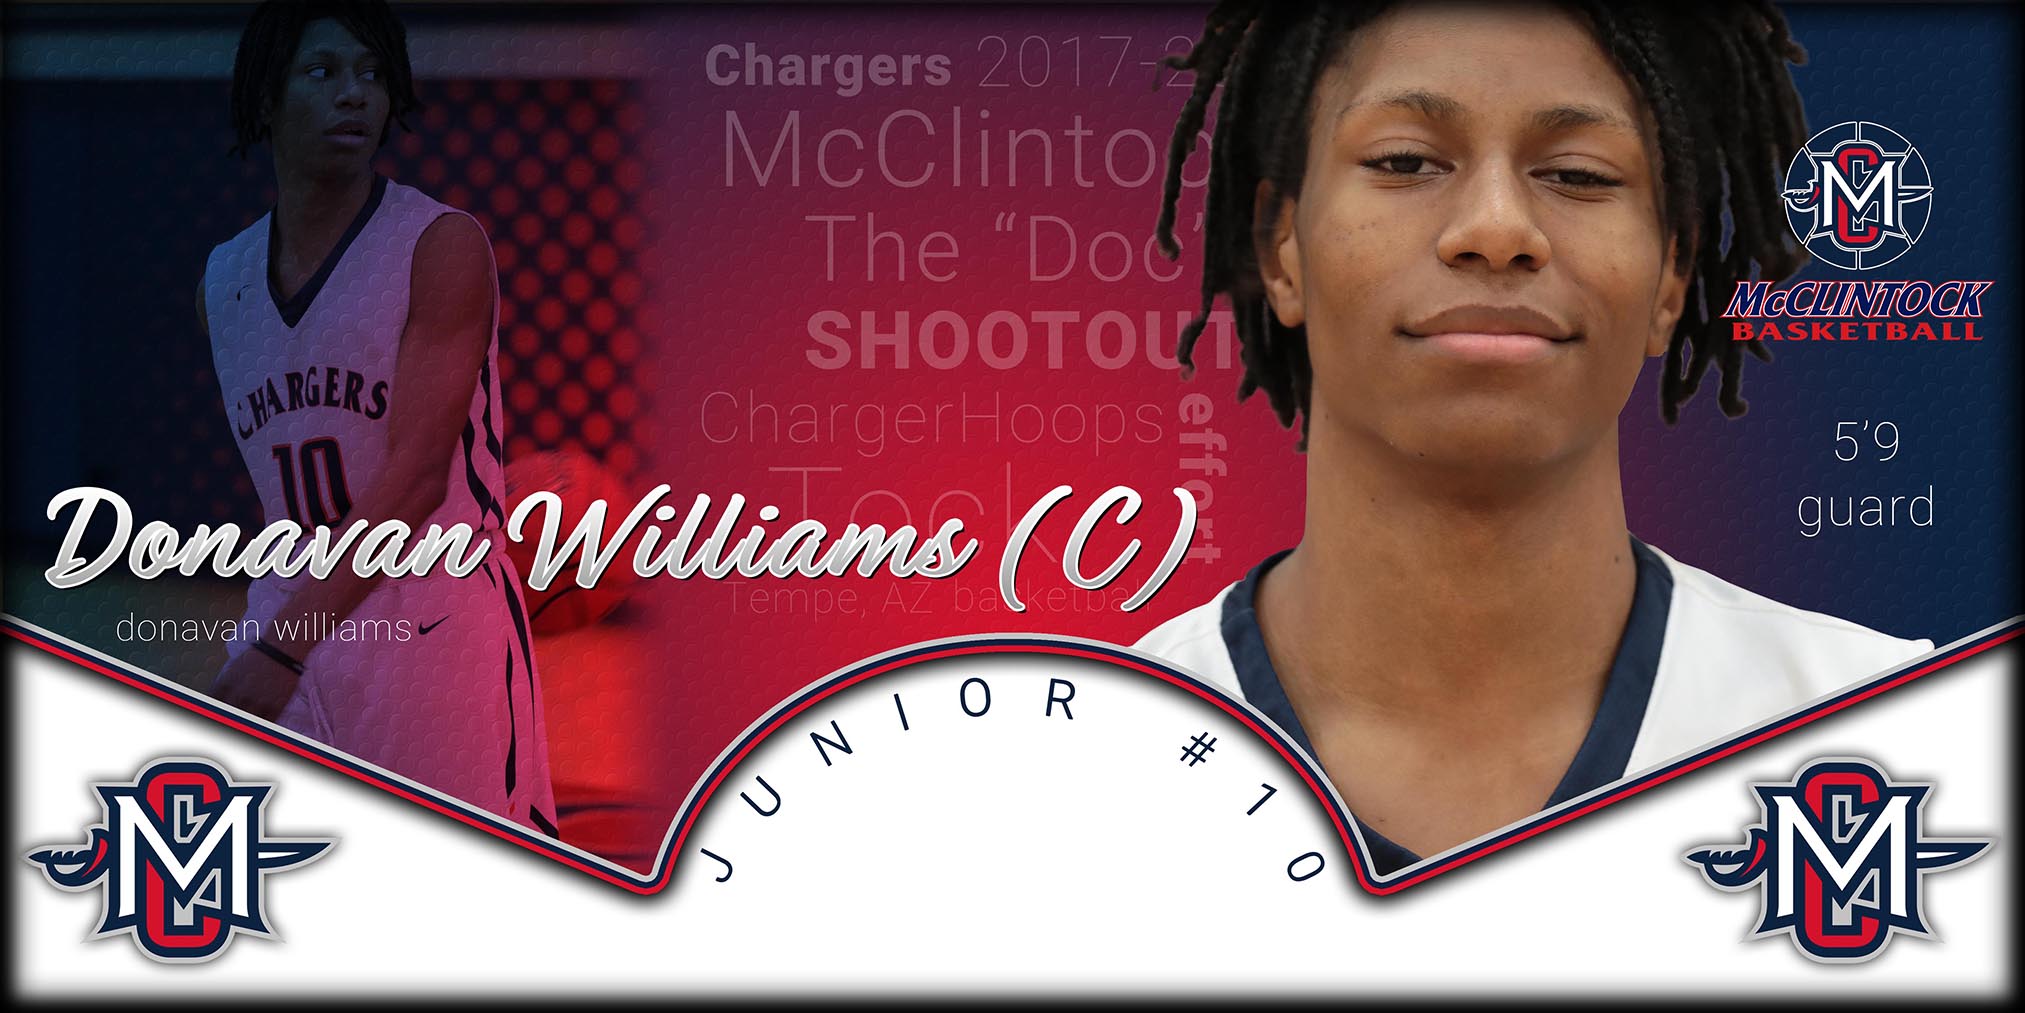 McClintock Chargers Basketball- Donavan Williams